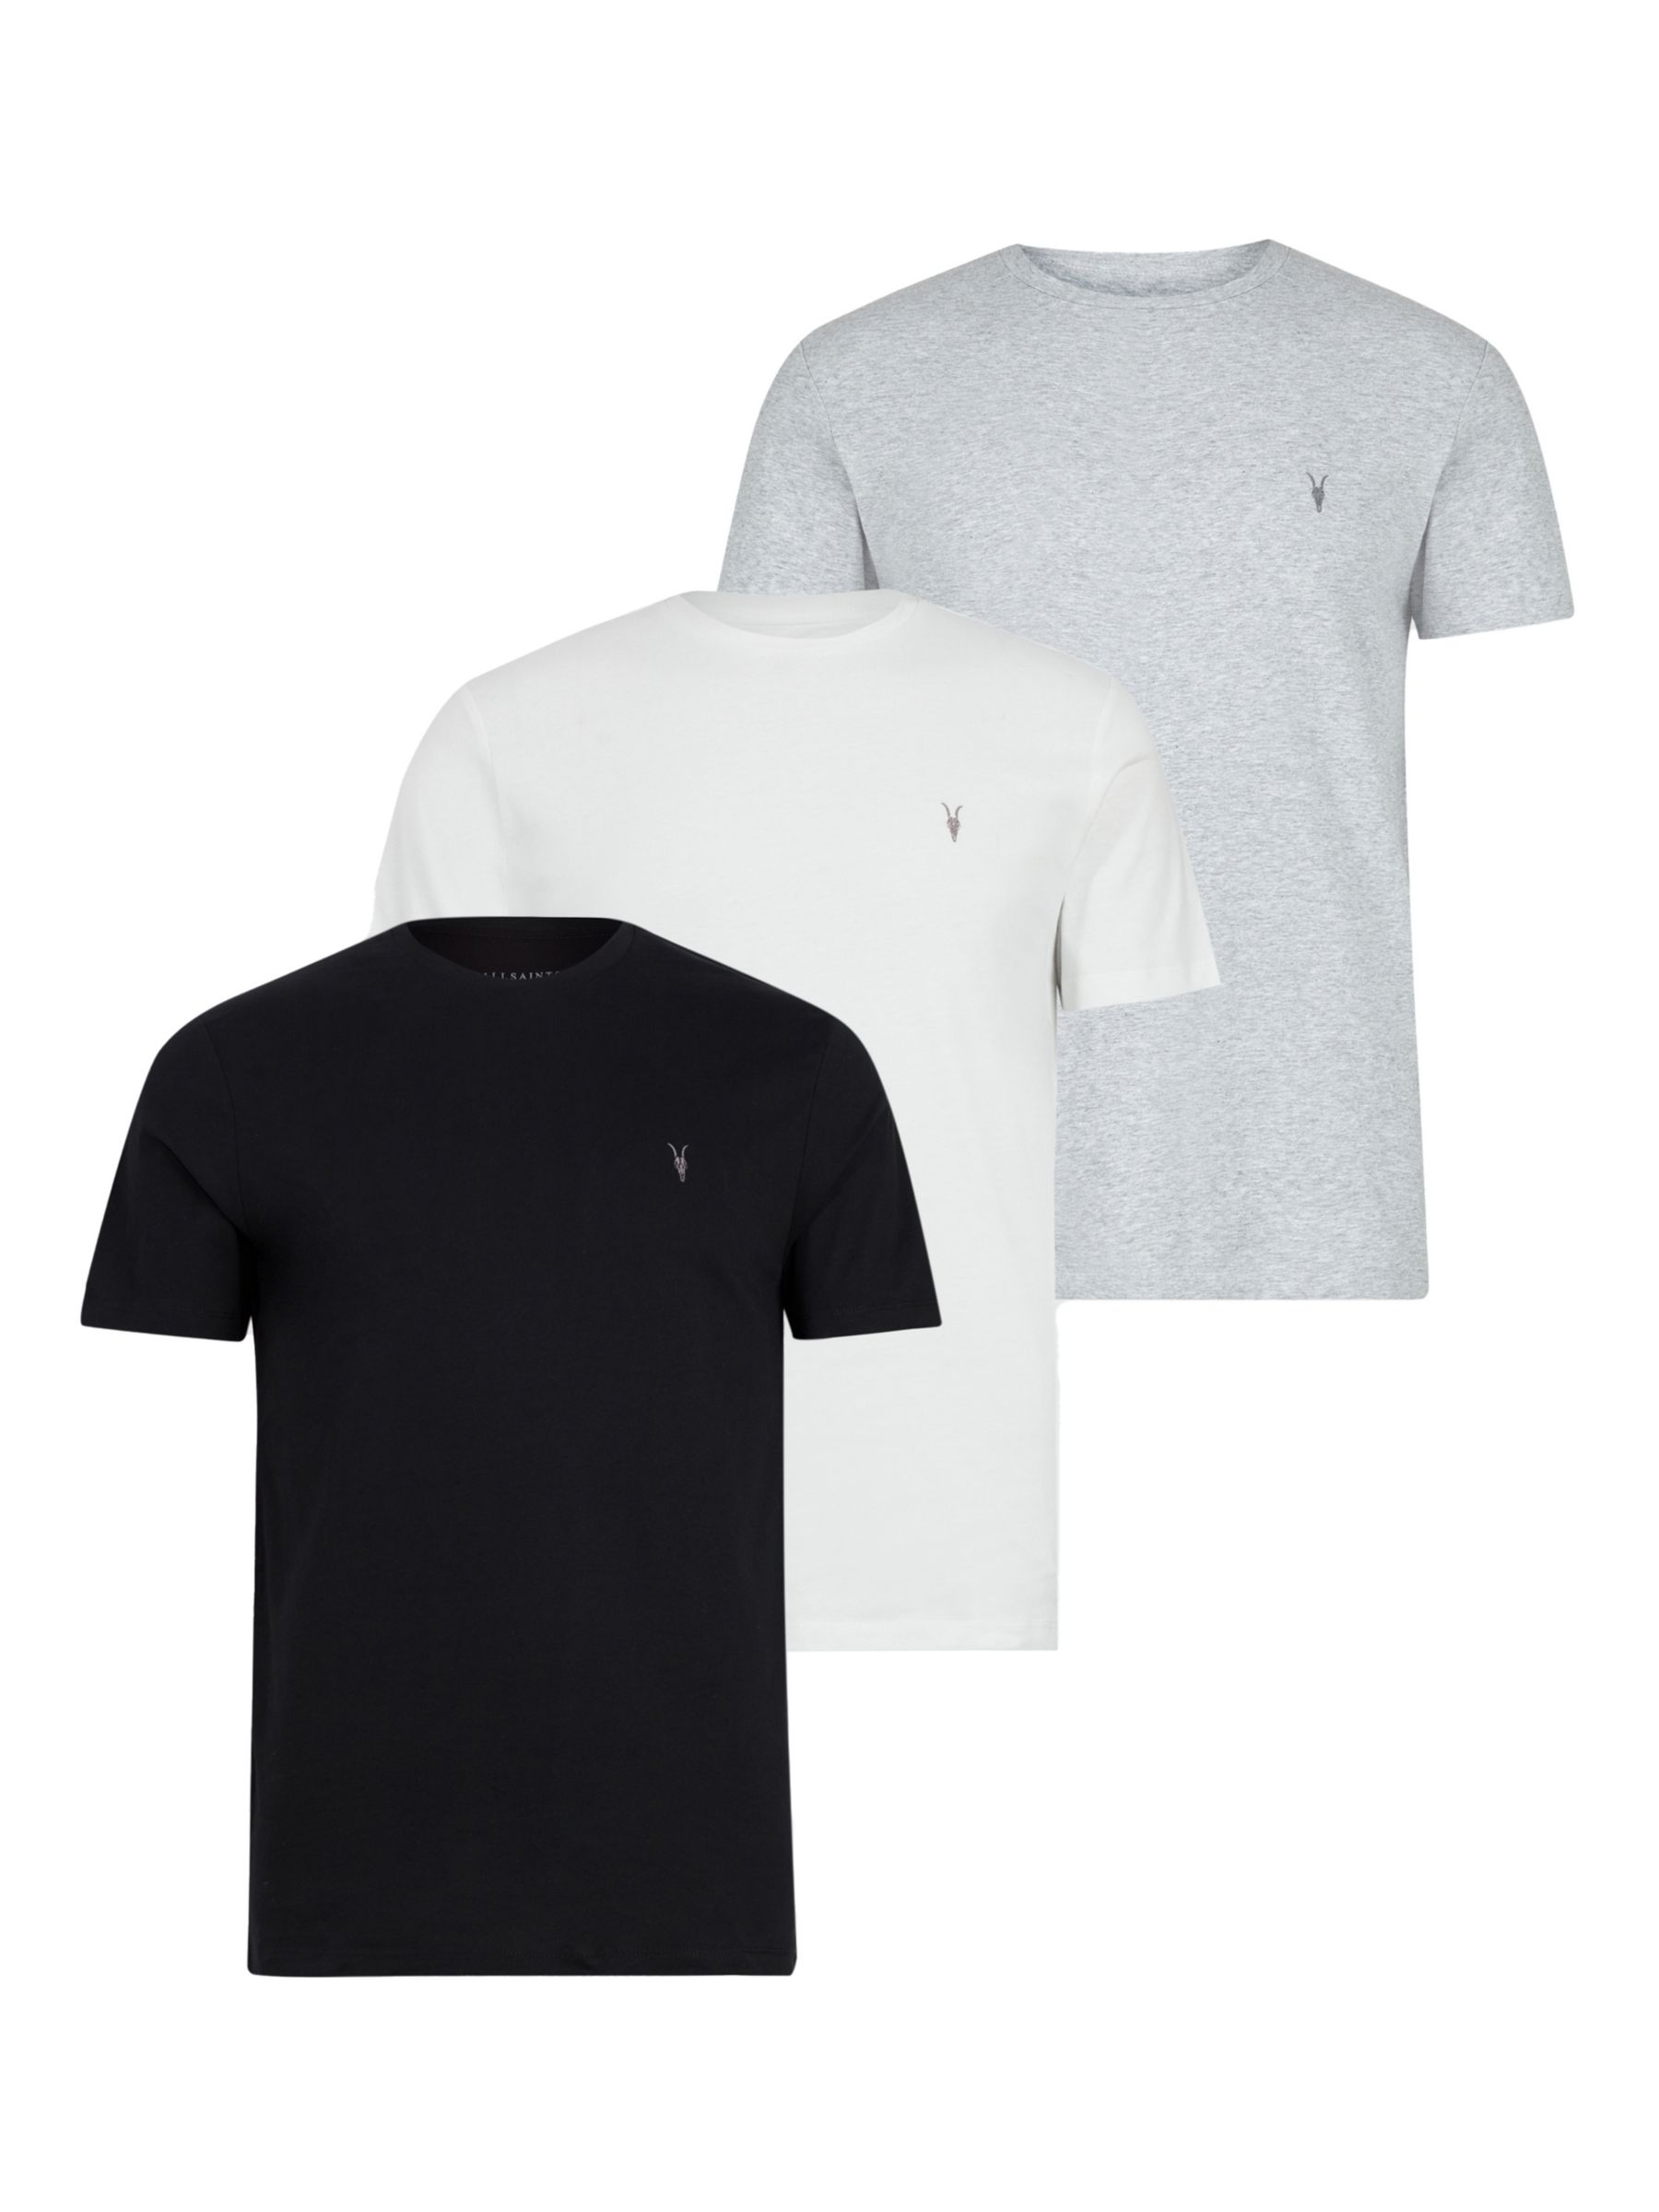 AllSaints Tonic Crew Neck T-Shirt, Pack of 3, White/Black/Grey, XS